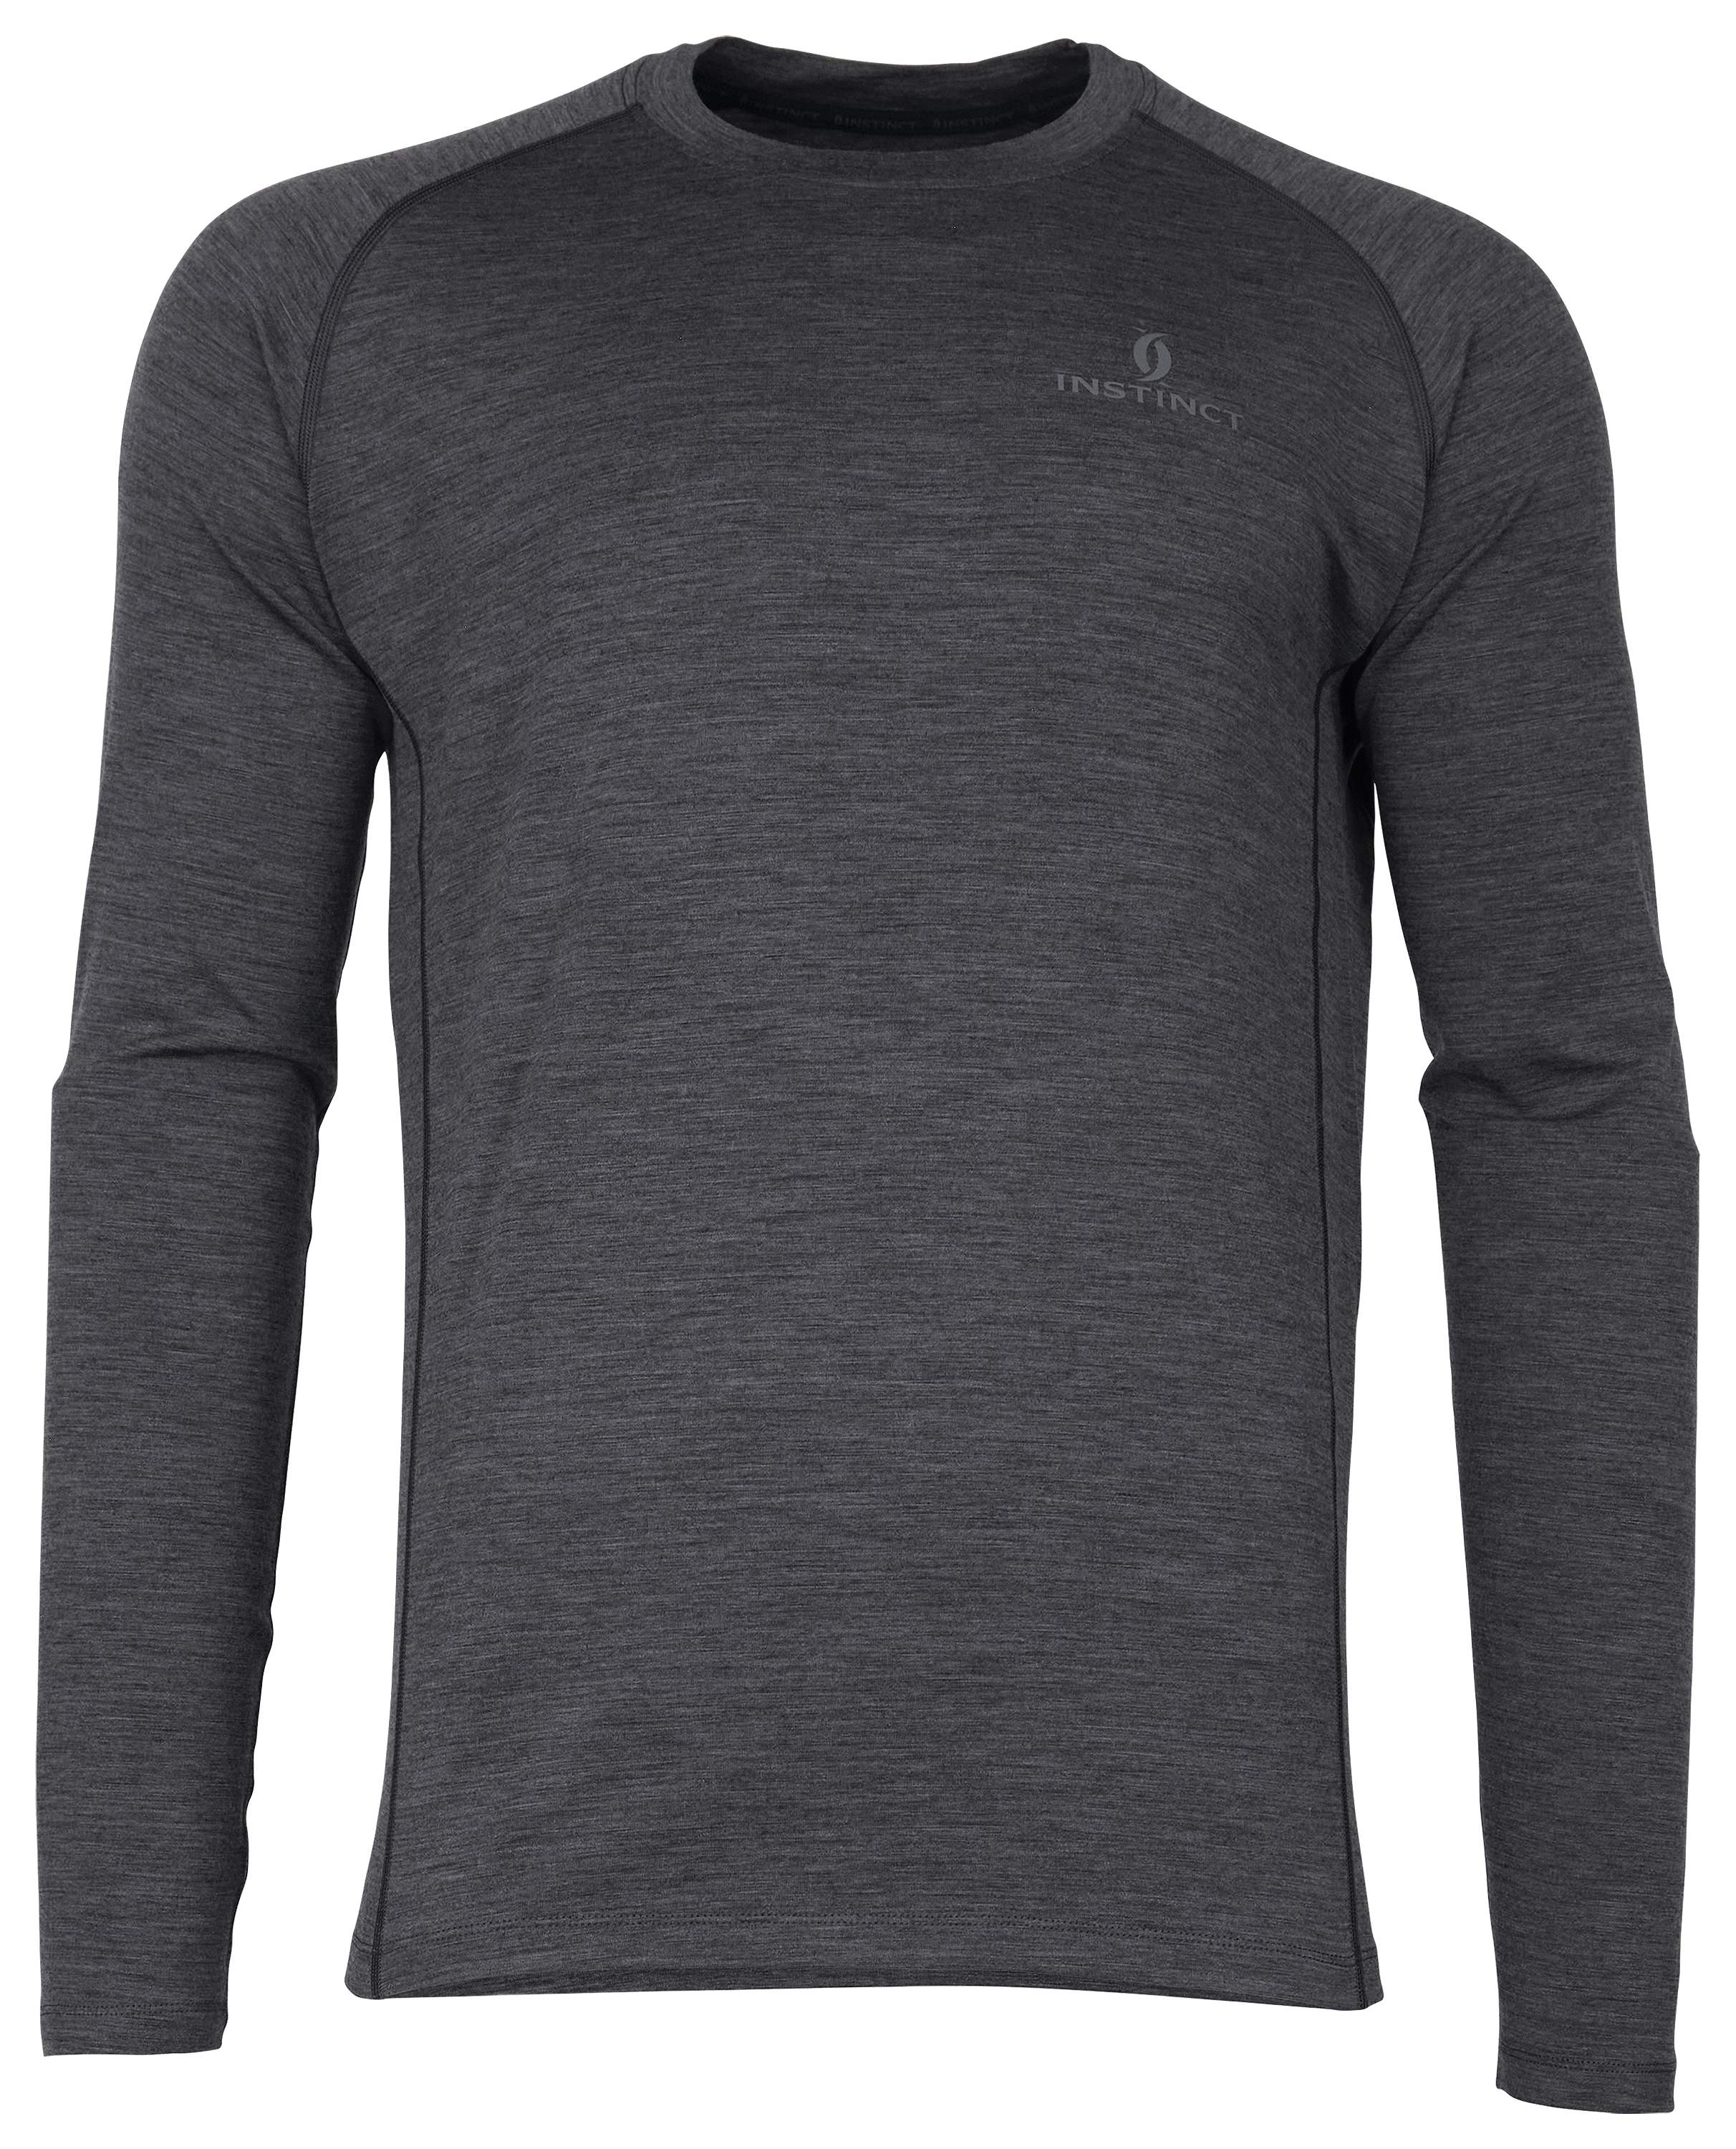 Cabela's Instinct Merino Wool Crew-Neck Long-Sleeve T-Shirt for Men - Flint - 3XL